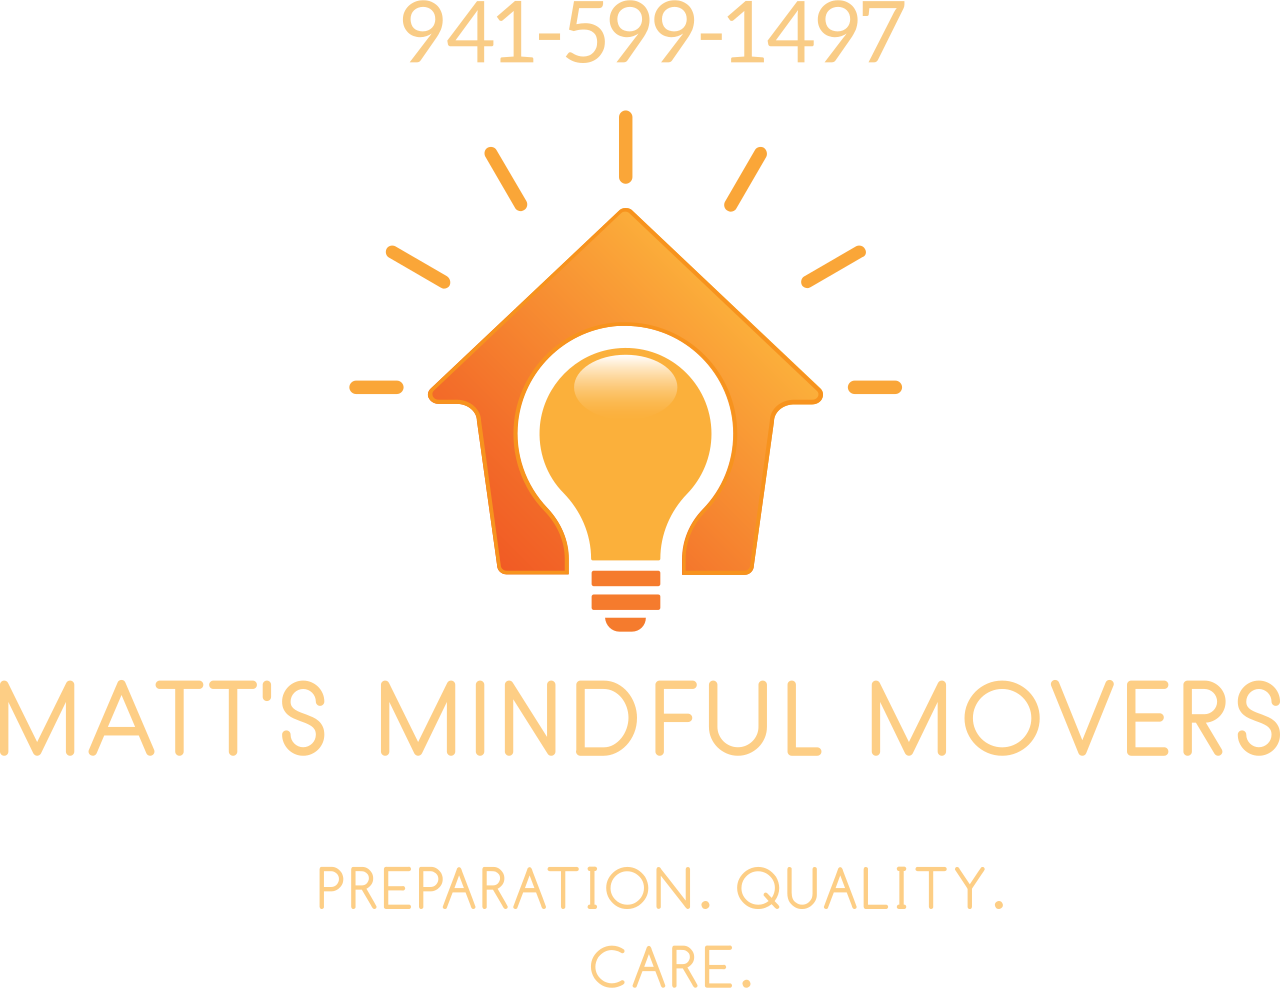 Matt's Mindful Movers's logo